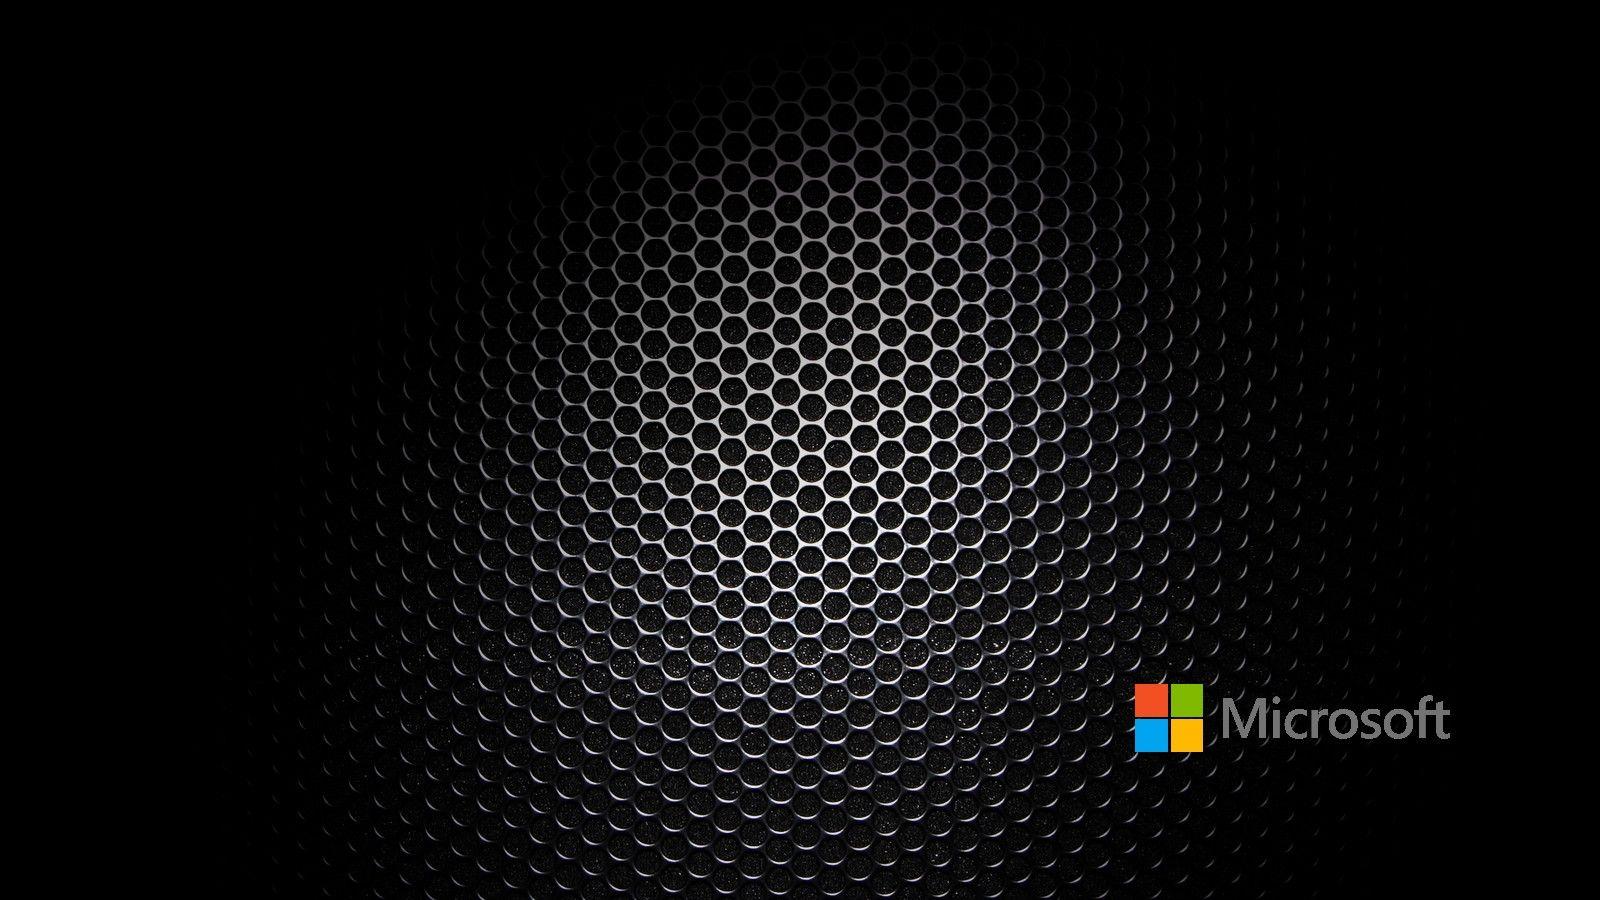 Quale smartphone di Microsoft terza schermata?